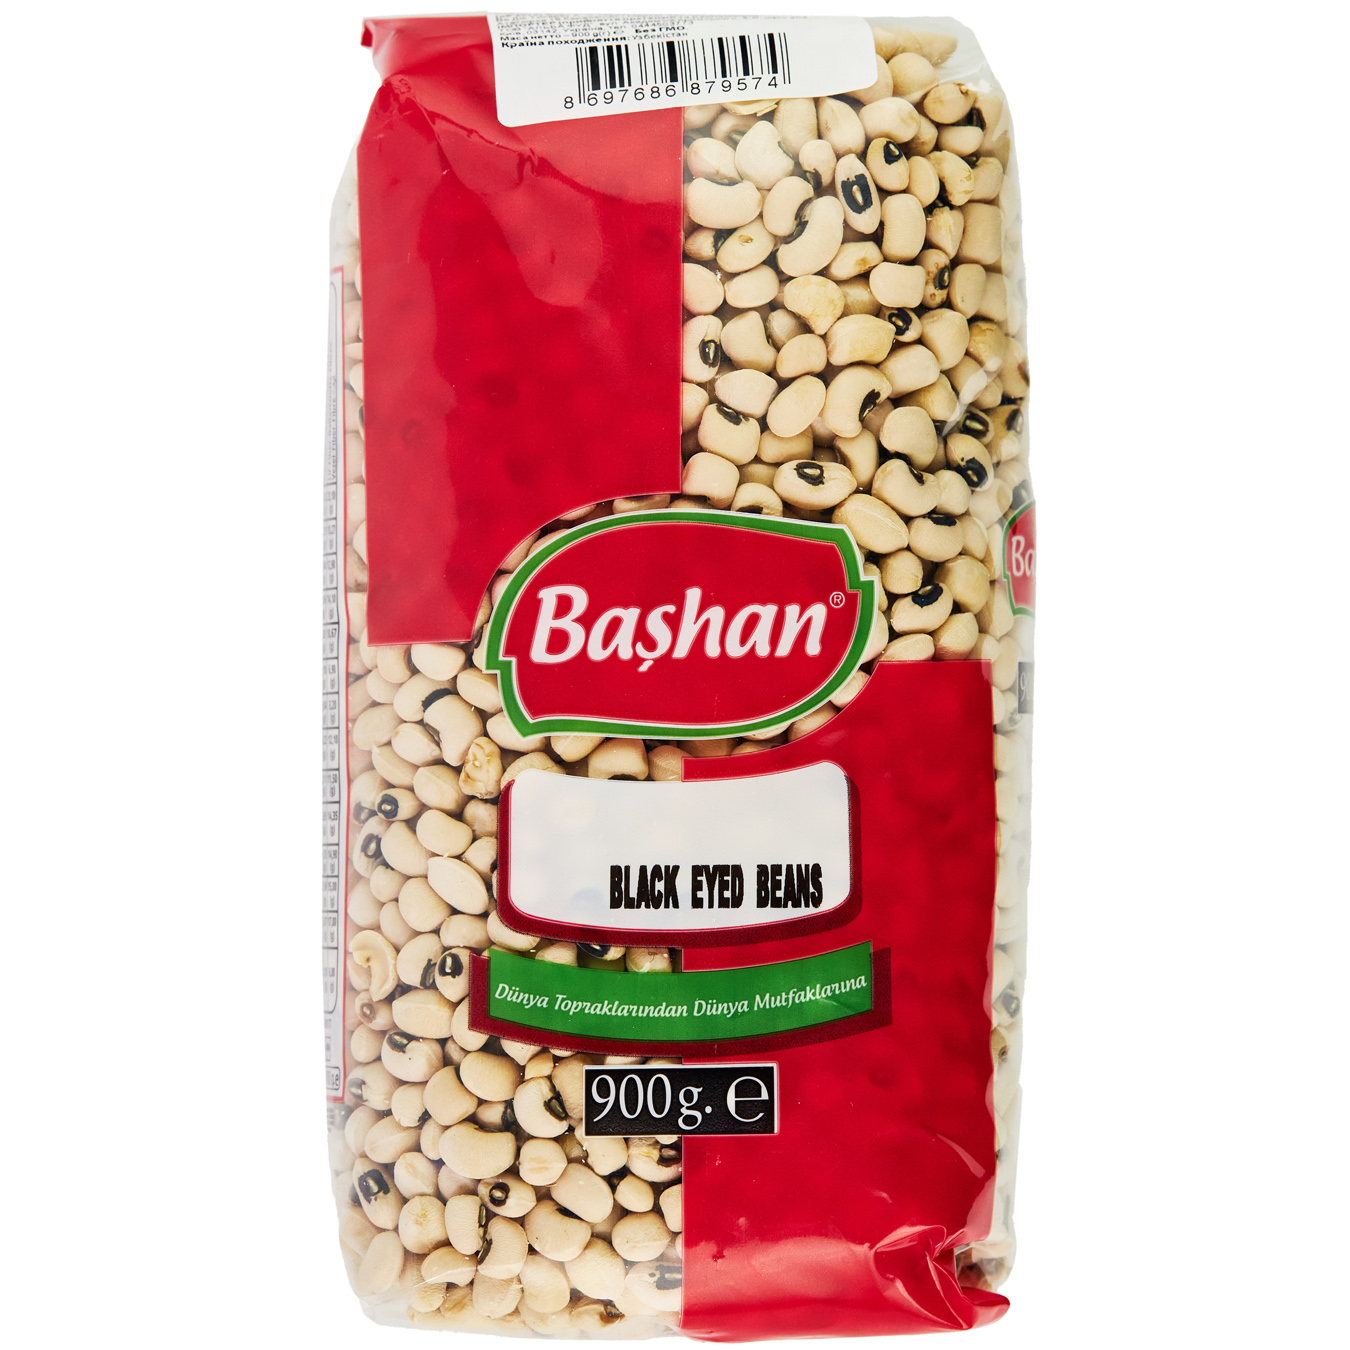 Bashan Black Eyed Beans 900g